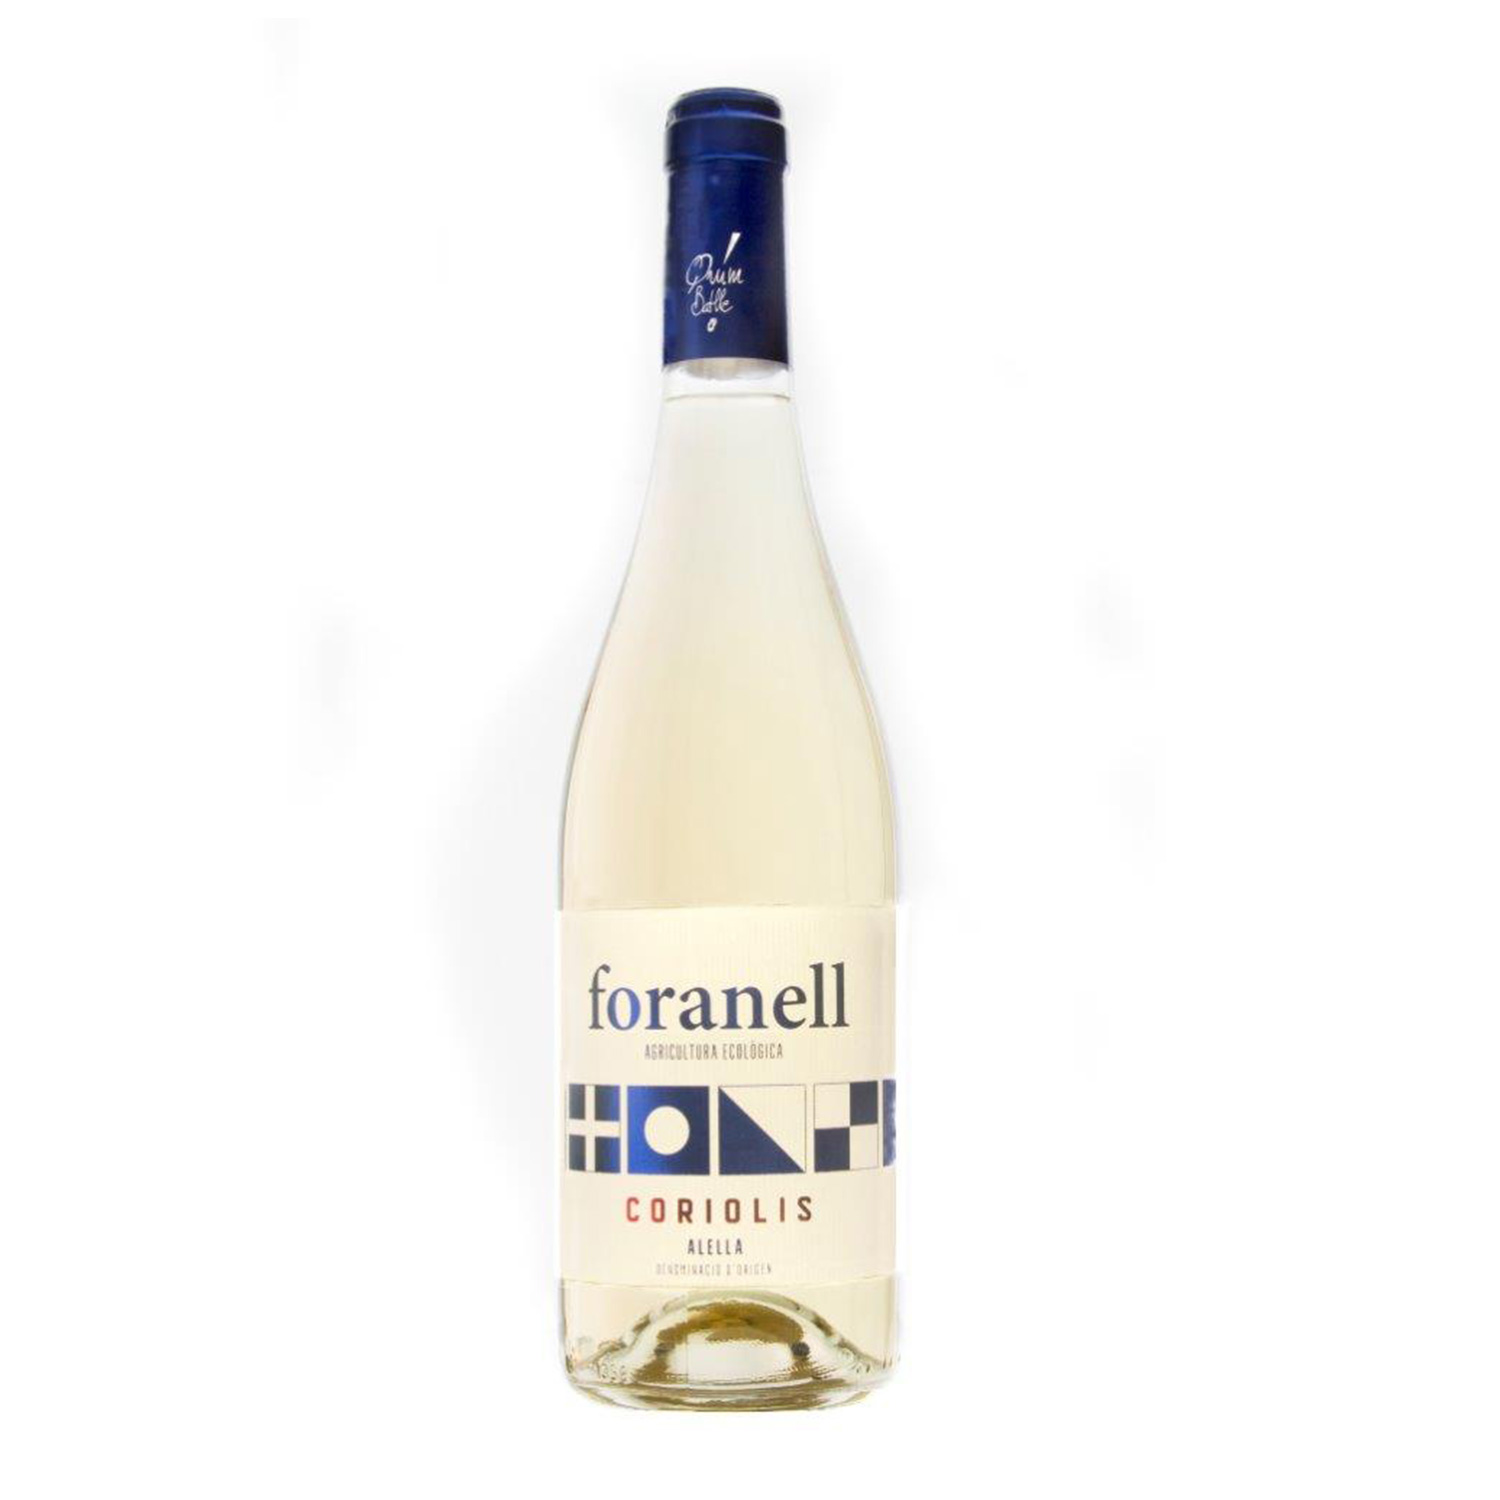 Foranell-Coriolis-Quim-Batlle-Vi-Blanc-Alella